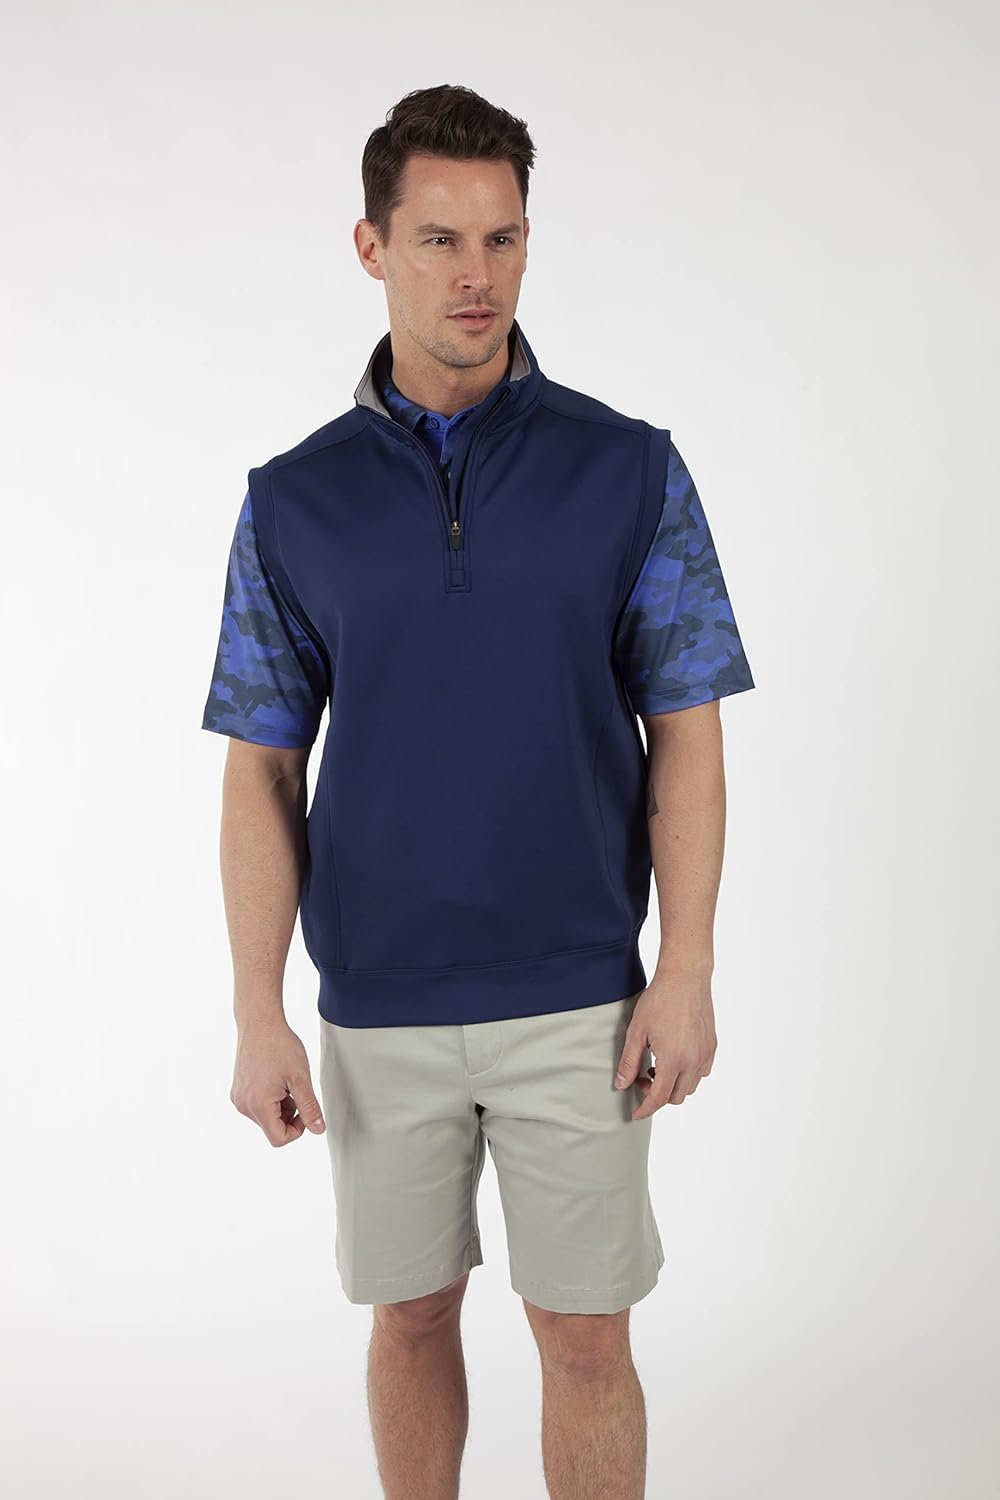 Golf Apparel - Performance RTJ Quarter-Zip Vest for Men